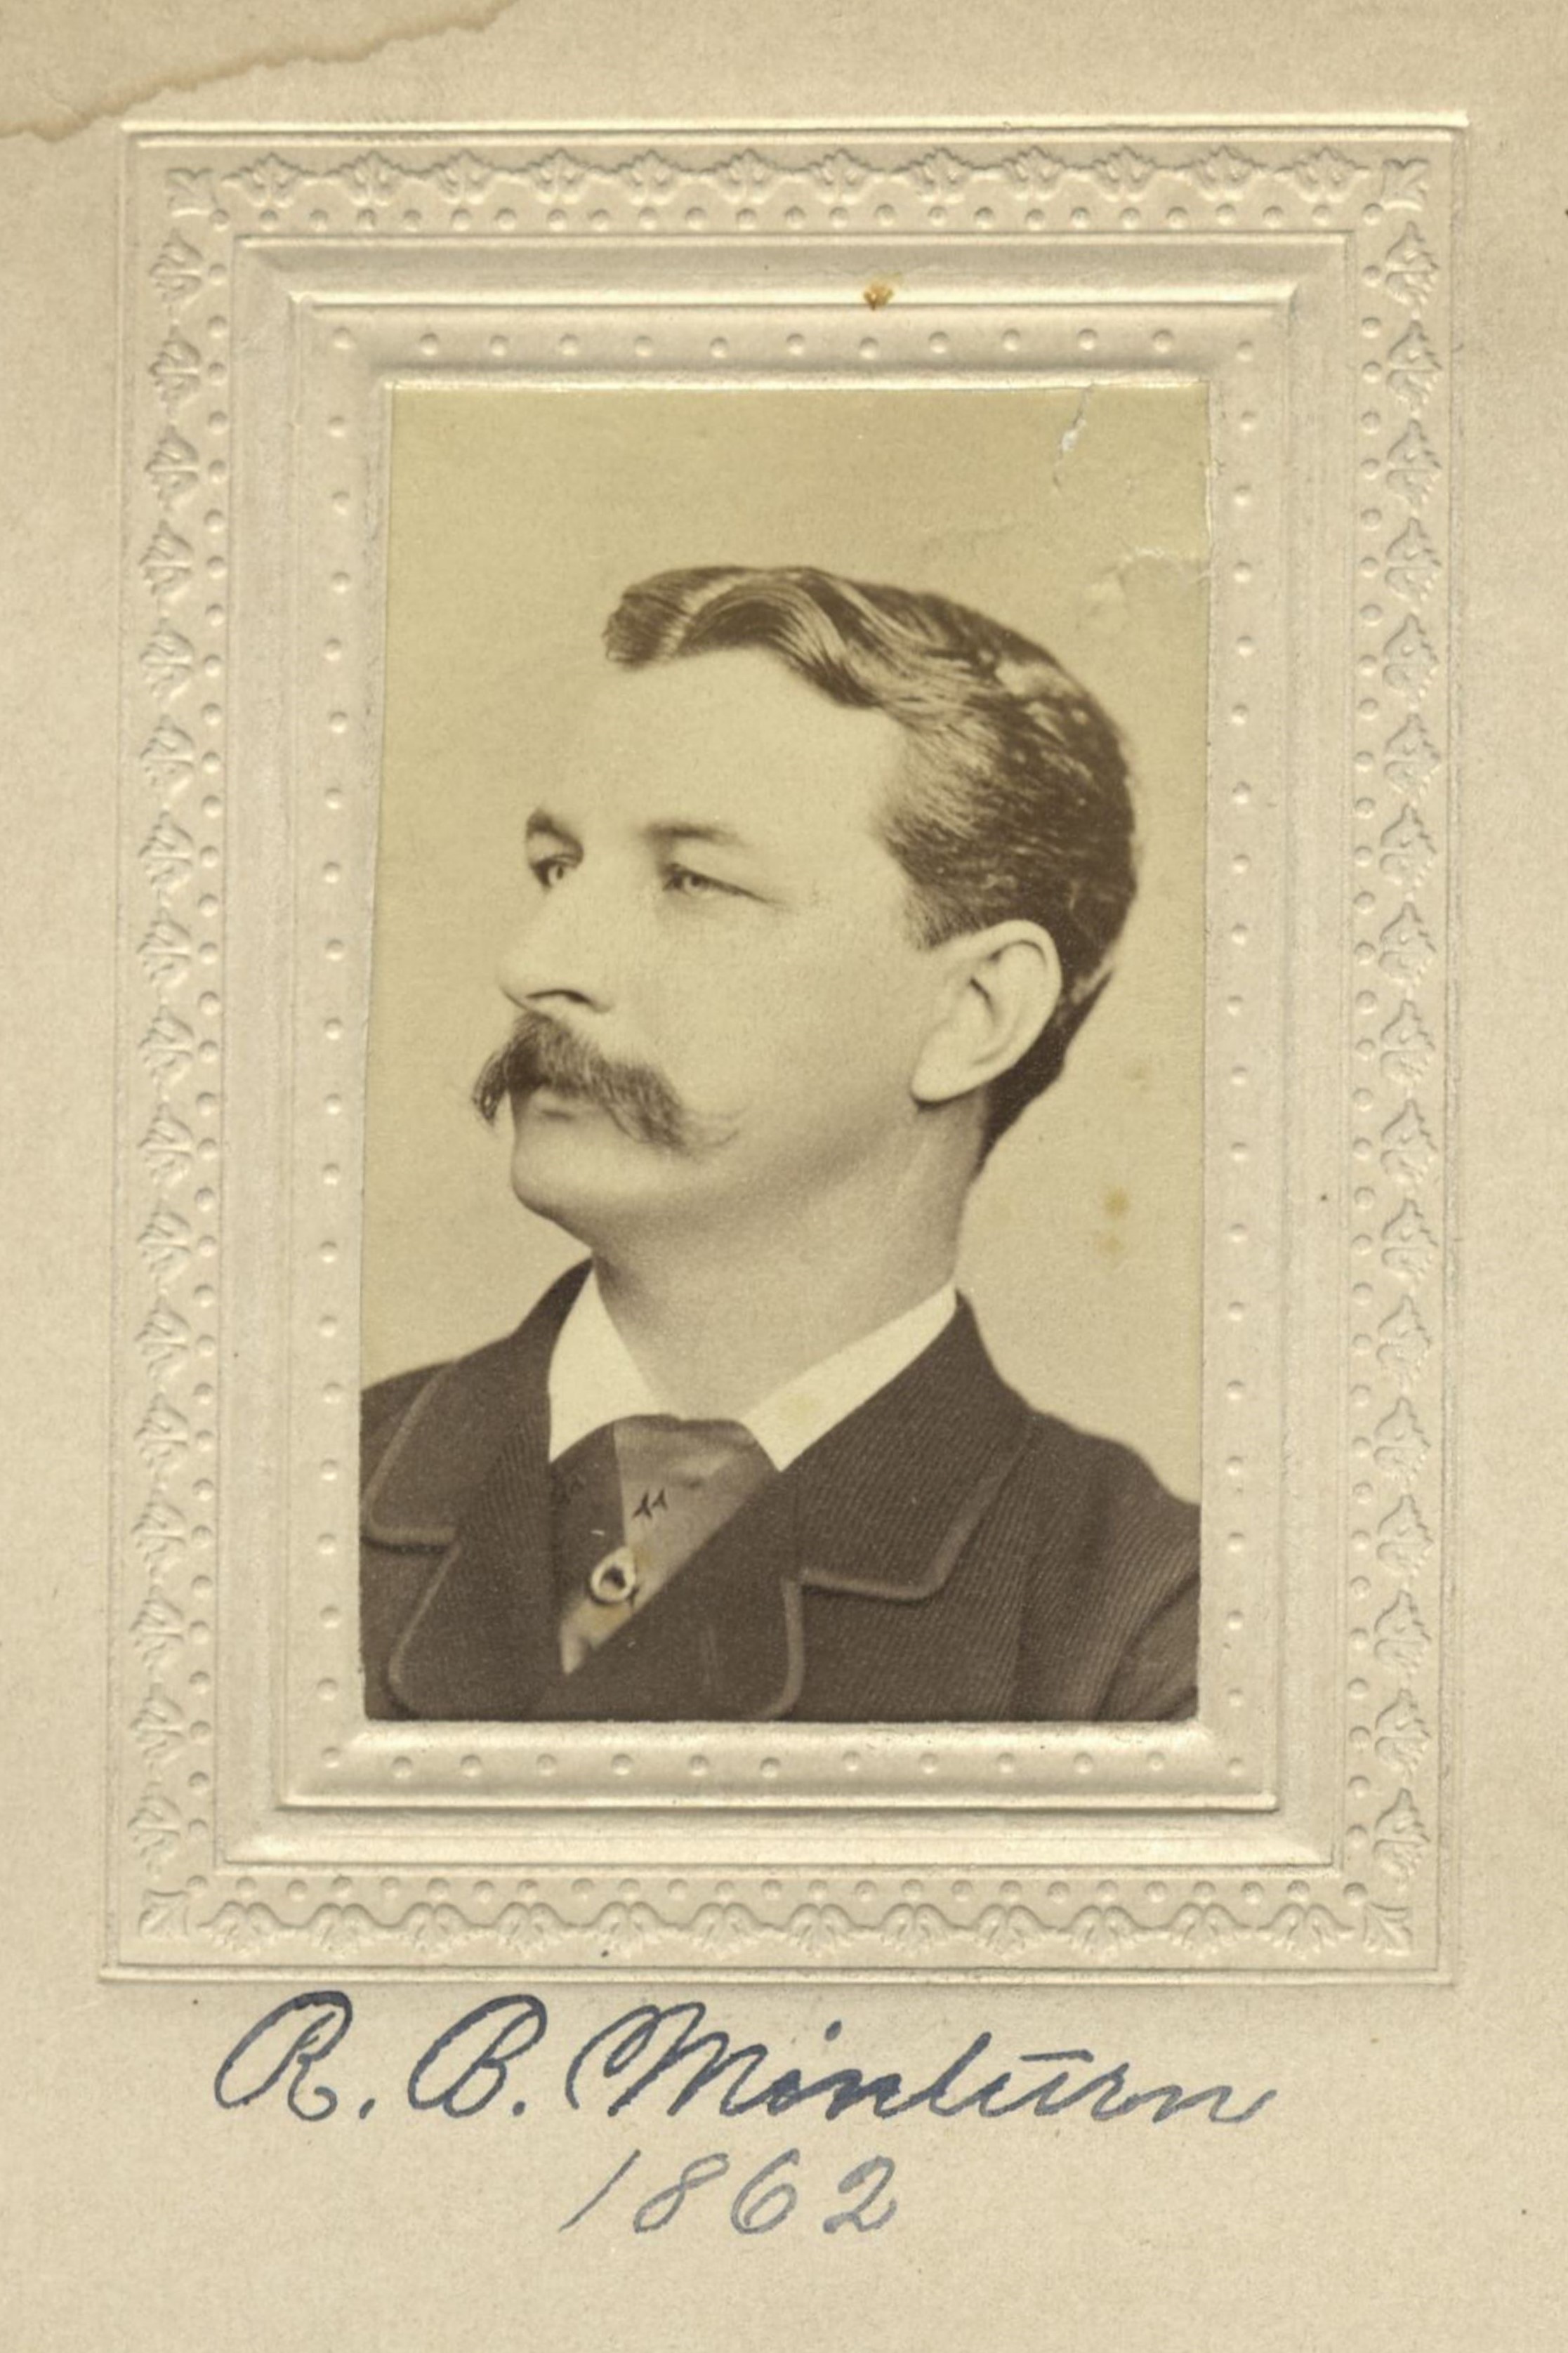 Member portrait of Robert B. Minturn